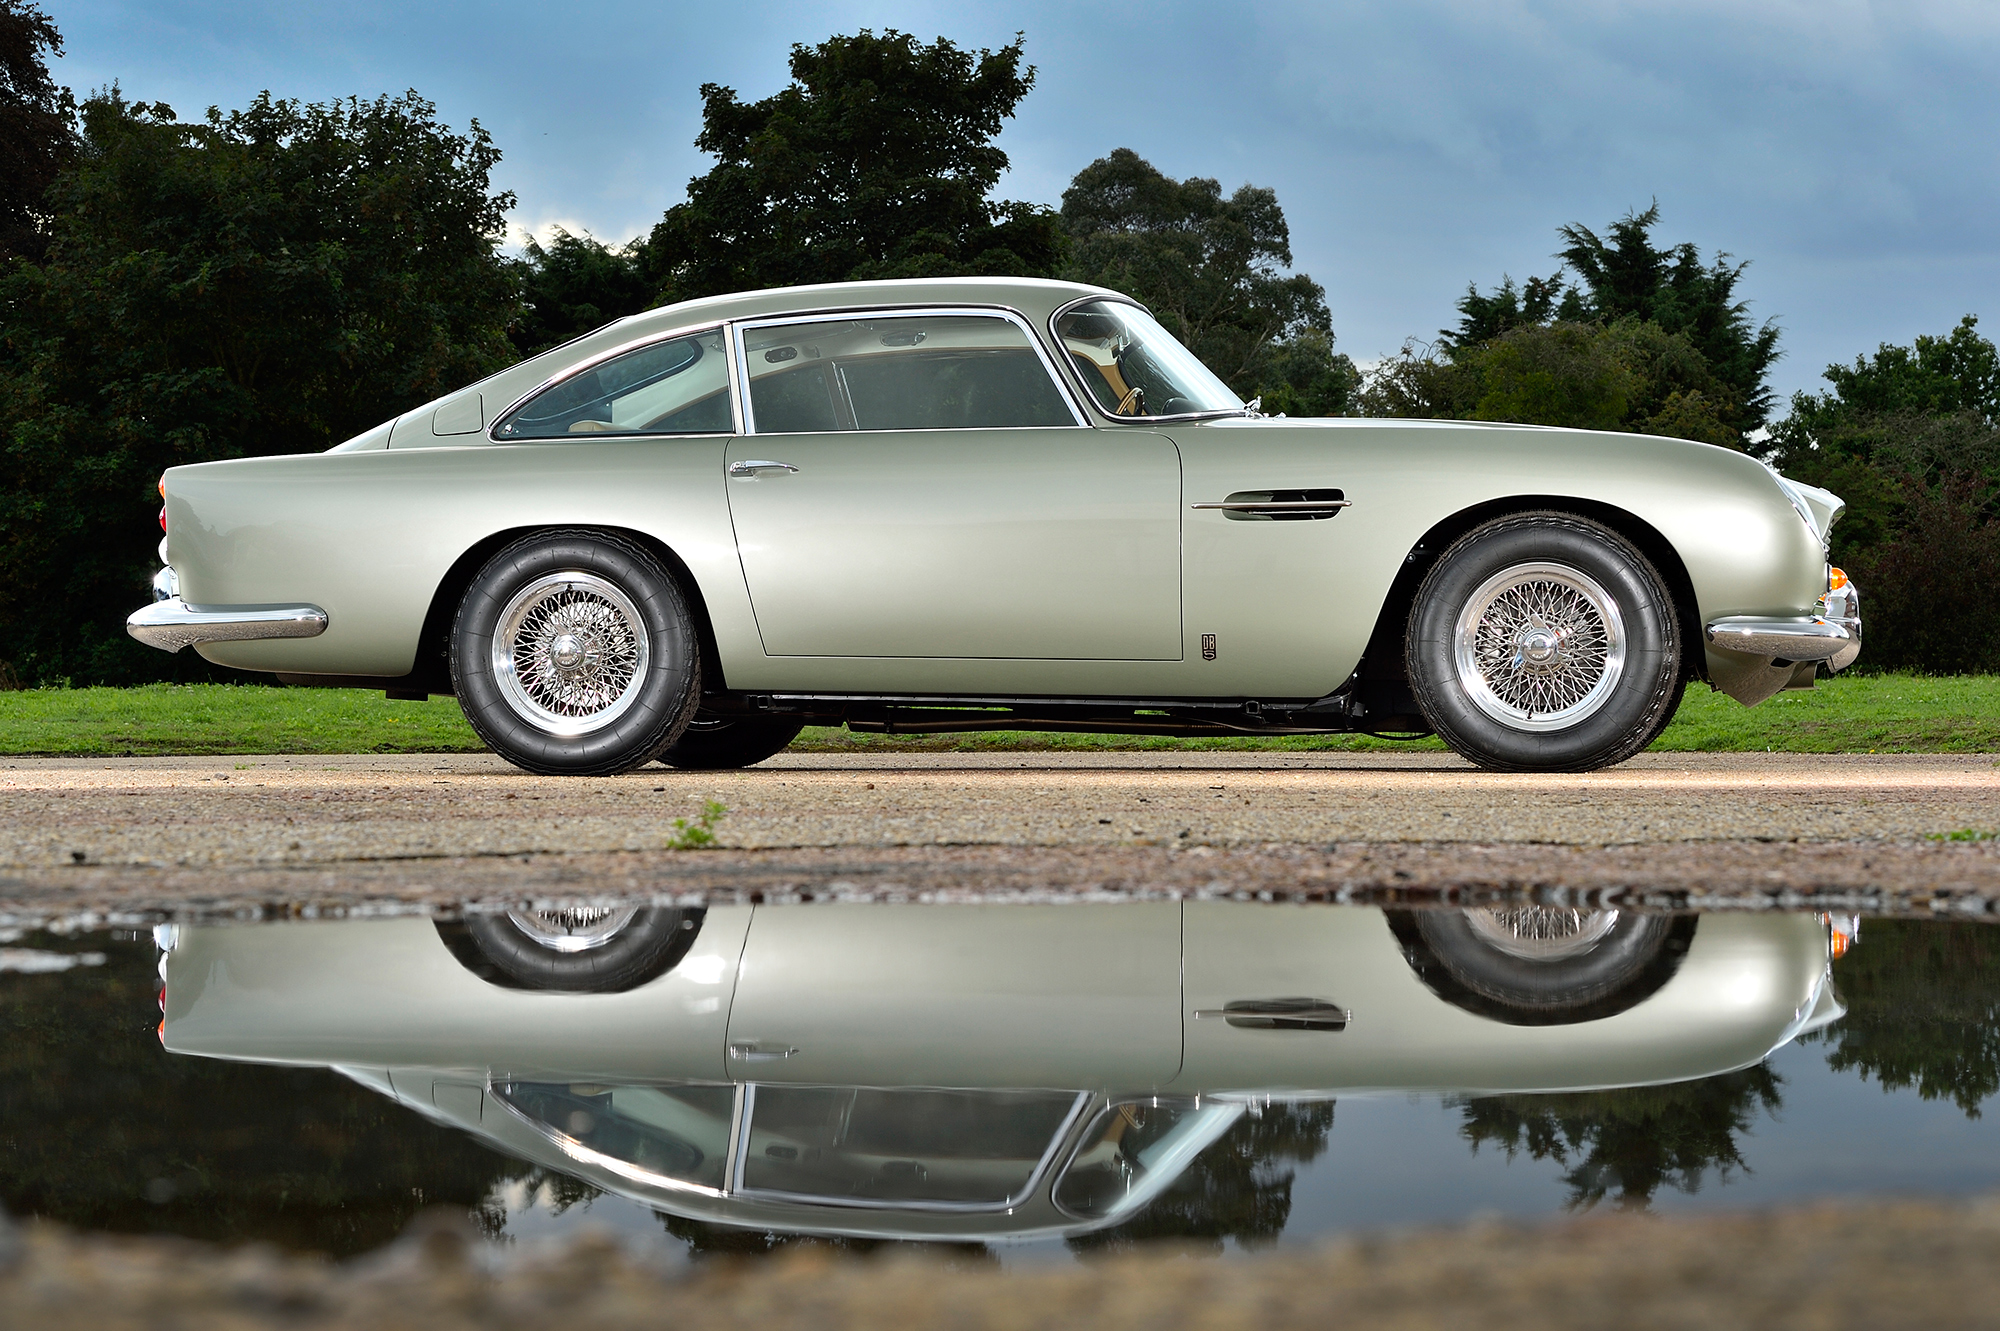 Aston Martin DB5, such an iconic car